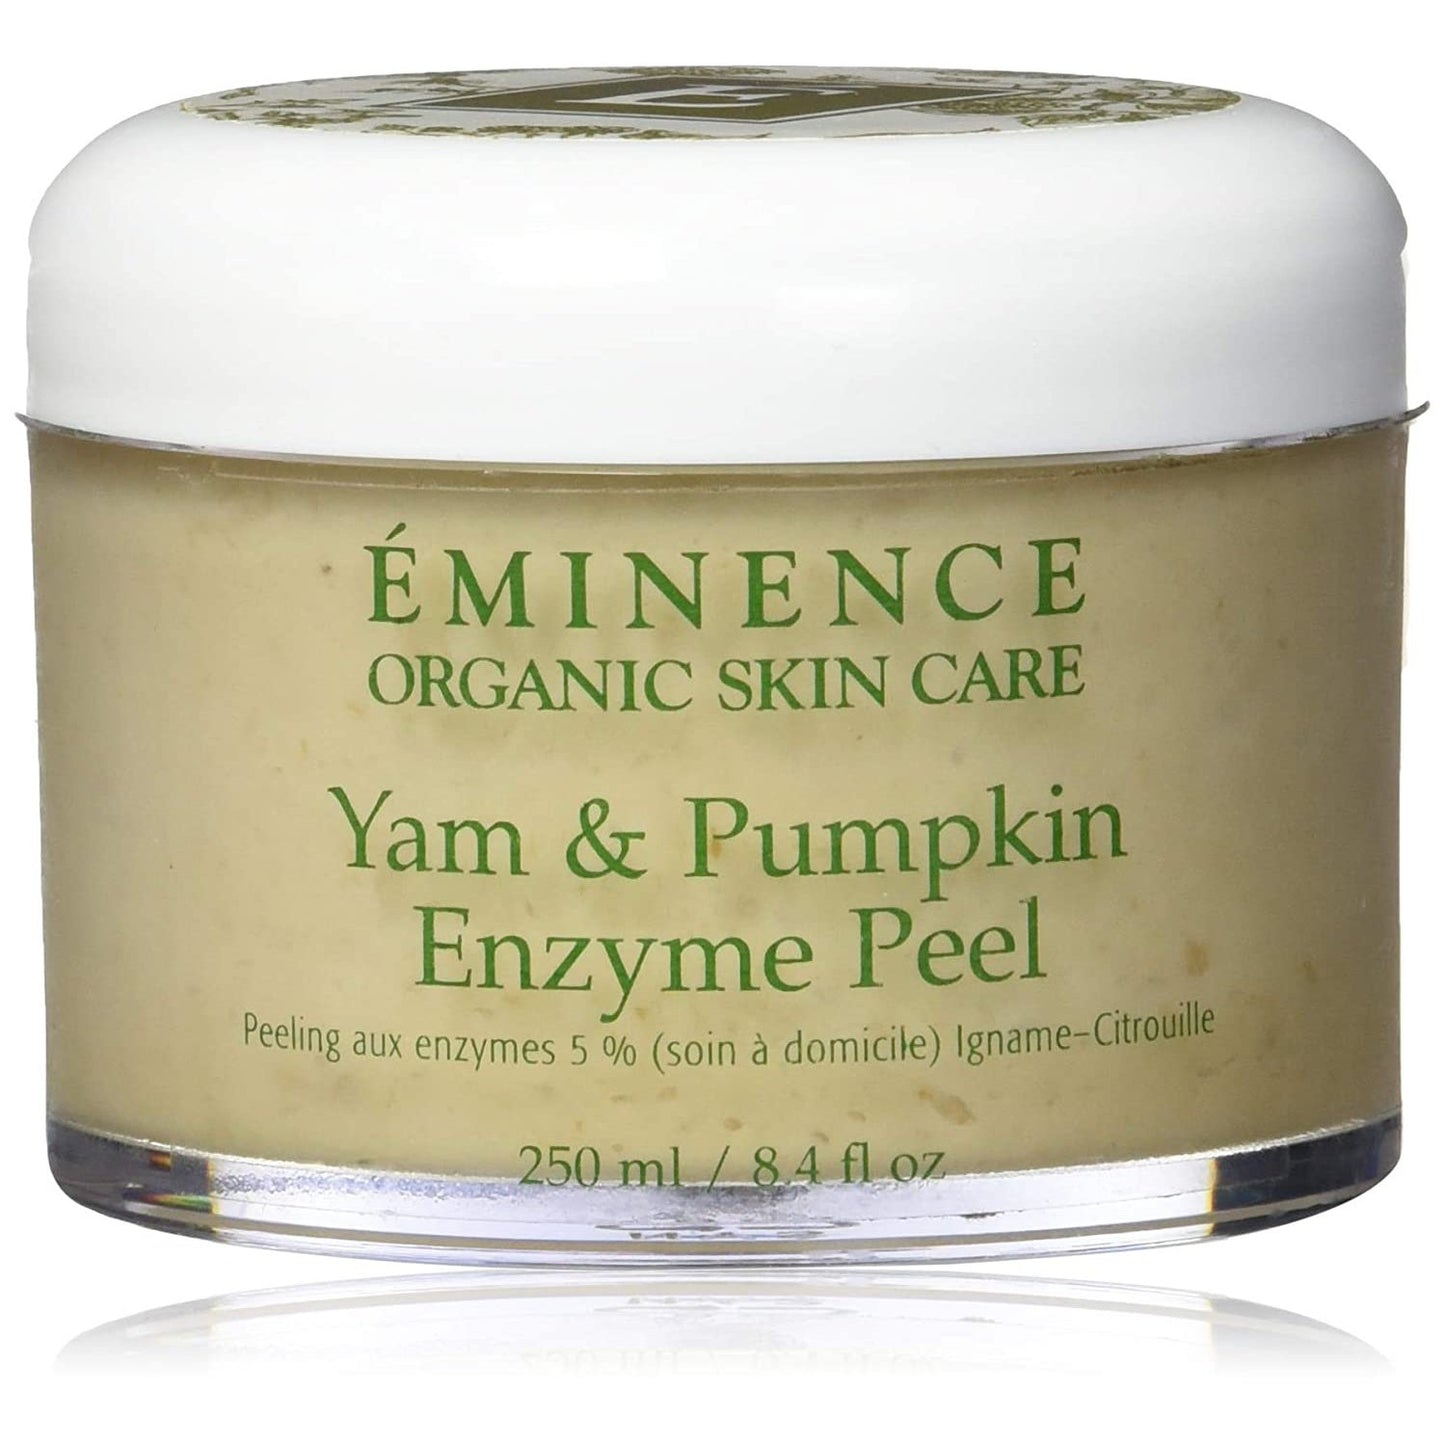 Eminence Yam & Pumpkin Enzyme Peel 5% - 250 ml / 8.4 oz (No Box)